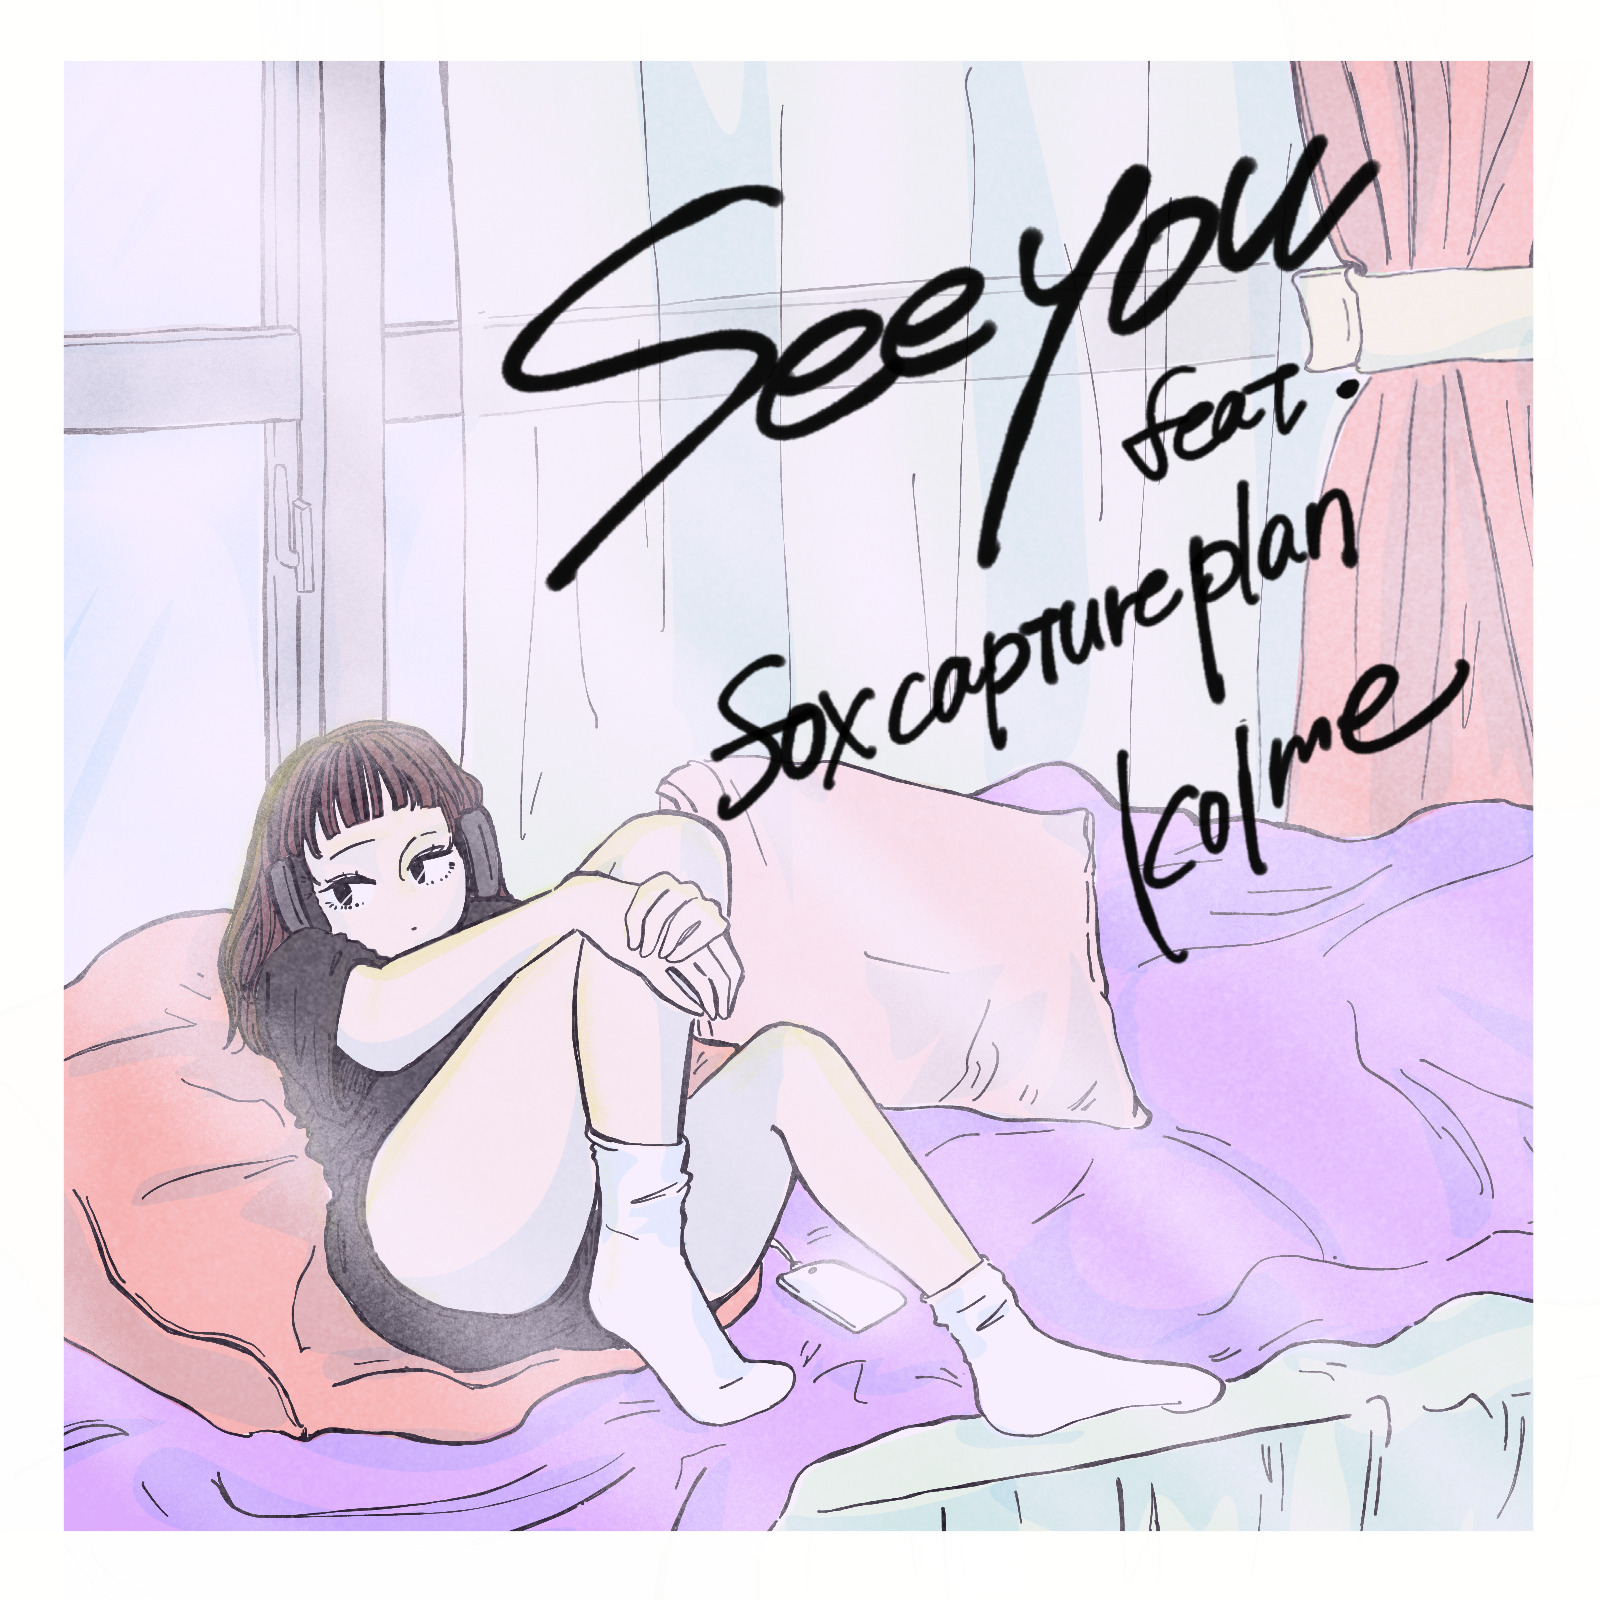 kolme、6月24日リリース「See you feat. fox capture plan」のアートワーク公開